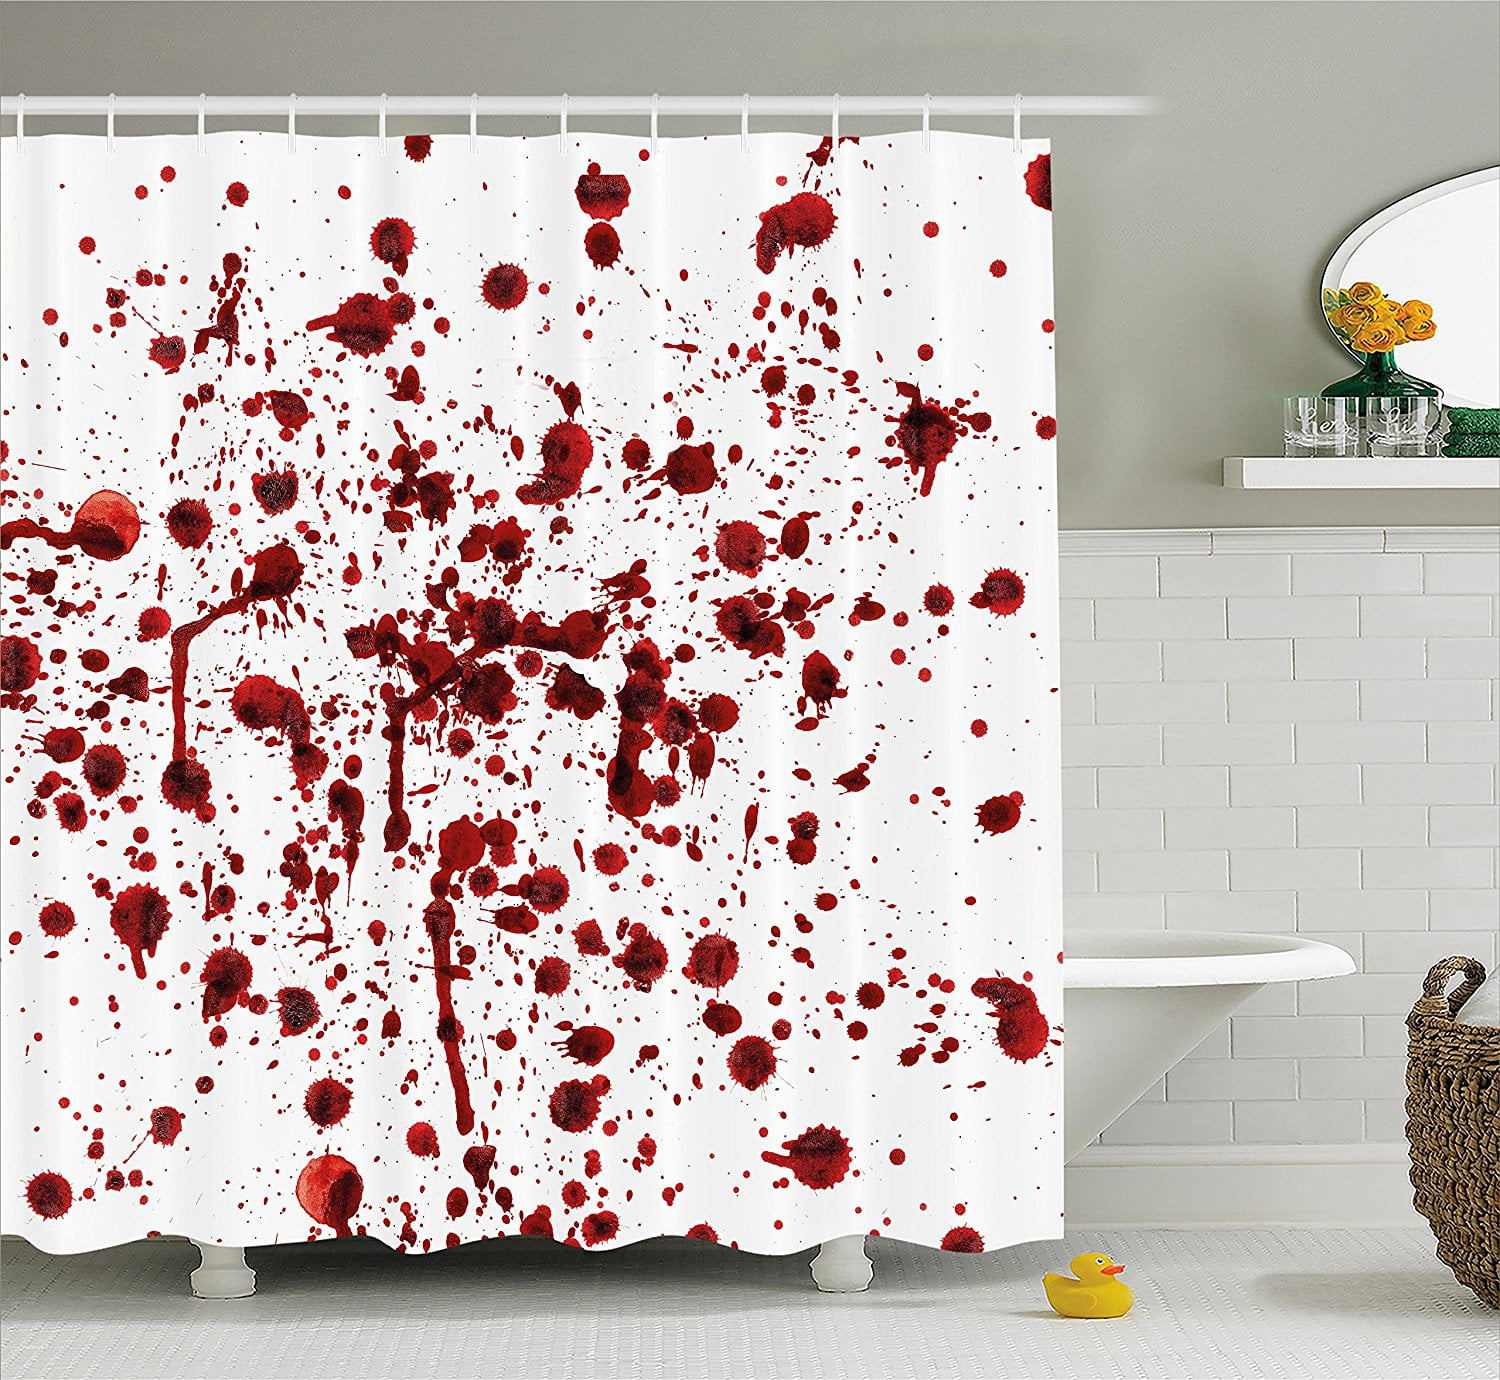 Halloween Bloody Wall Horror Hands Fabric Shower Curtain Set Bathroom Decor 